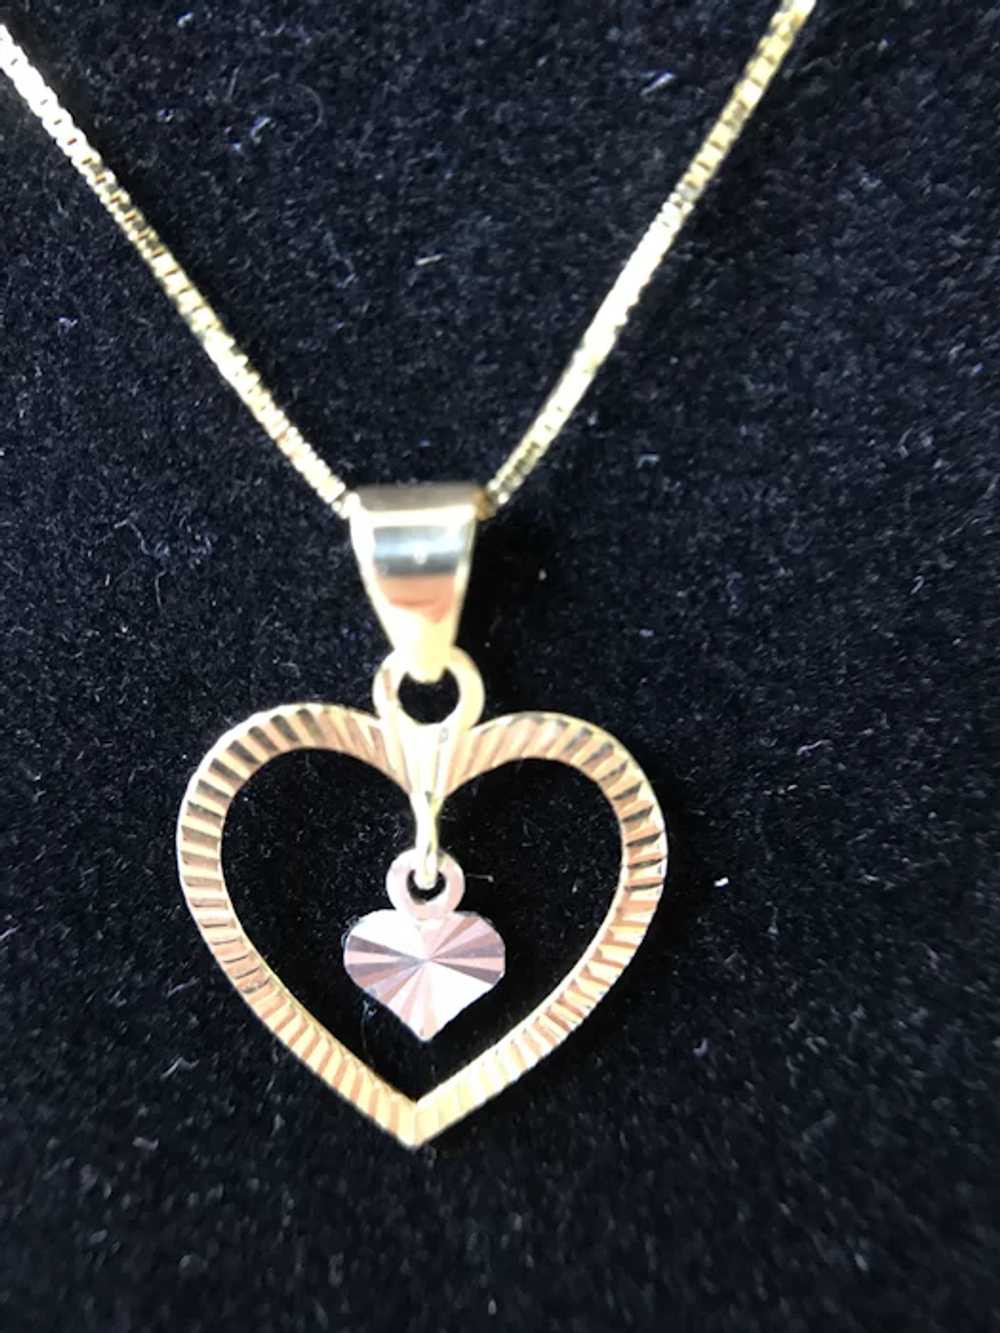 Etched 14K Gold Heart Pendant Necklace - image 9